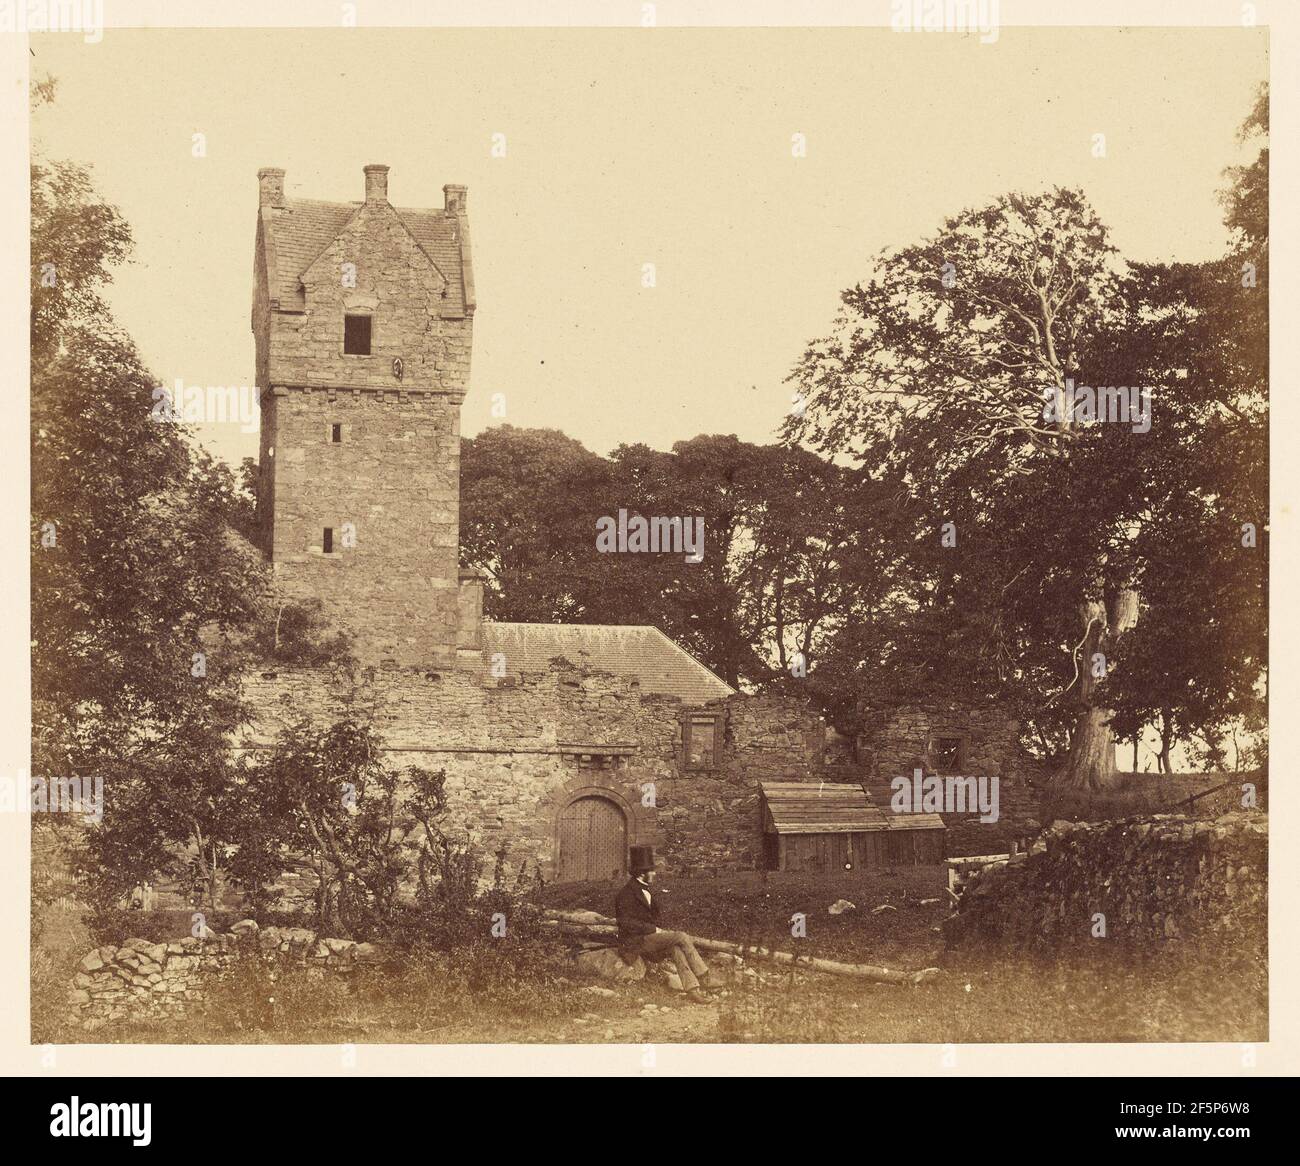 The Castle of the Mains, Forfarshire. John Sturrock, Jr. (British, active 1850s) Stock Photo